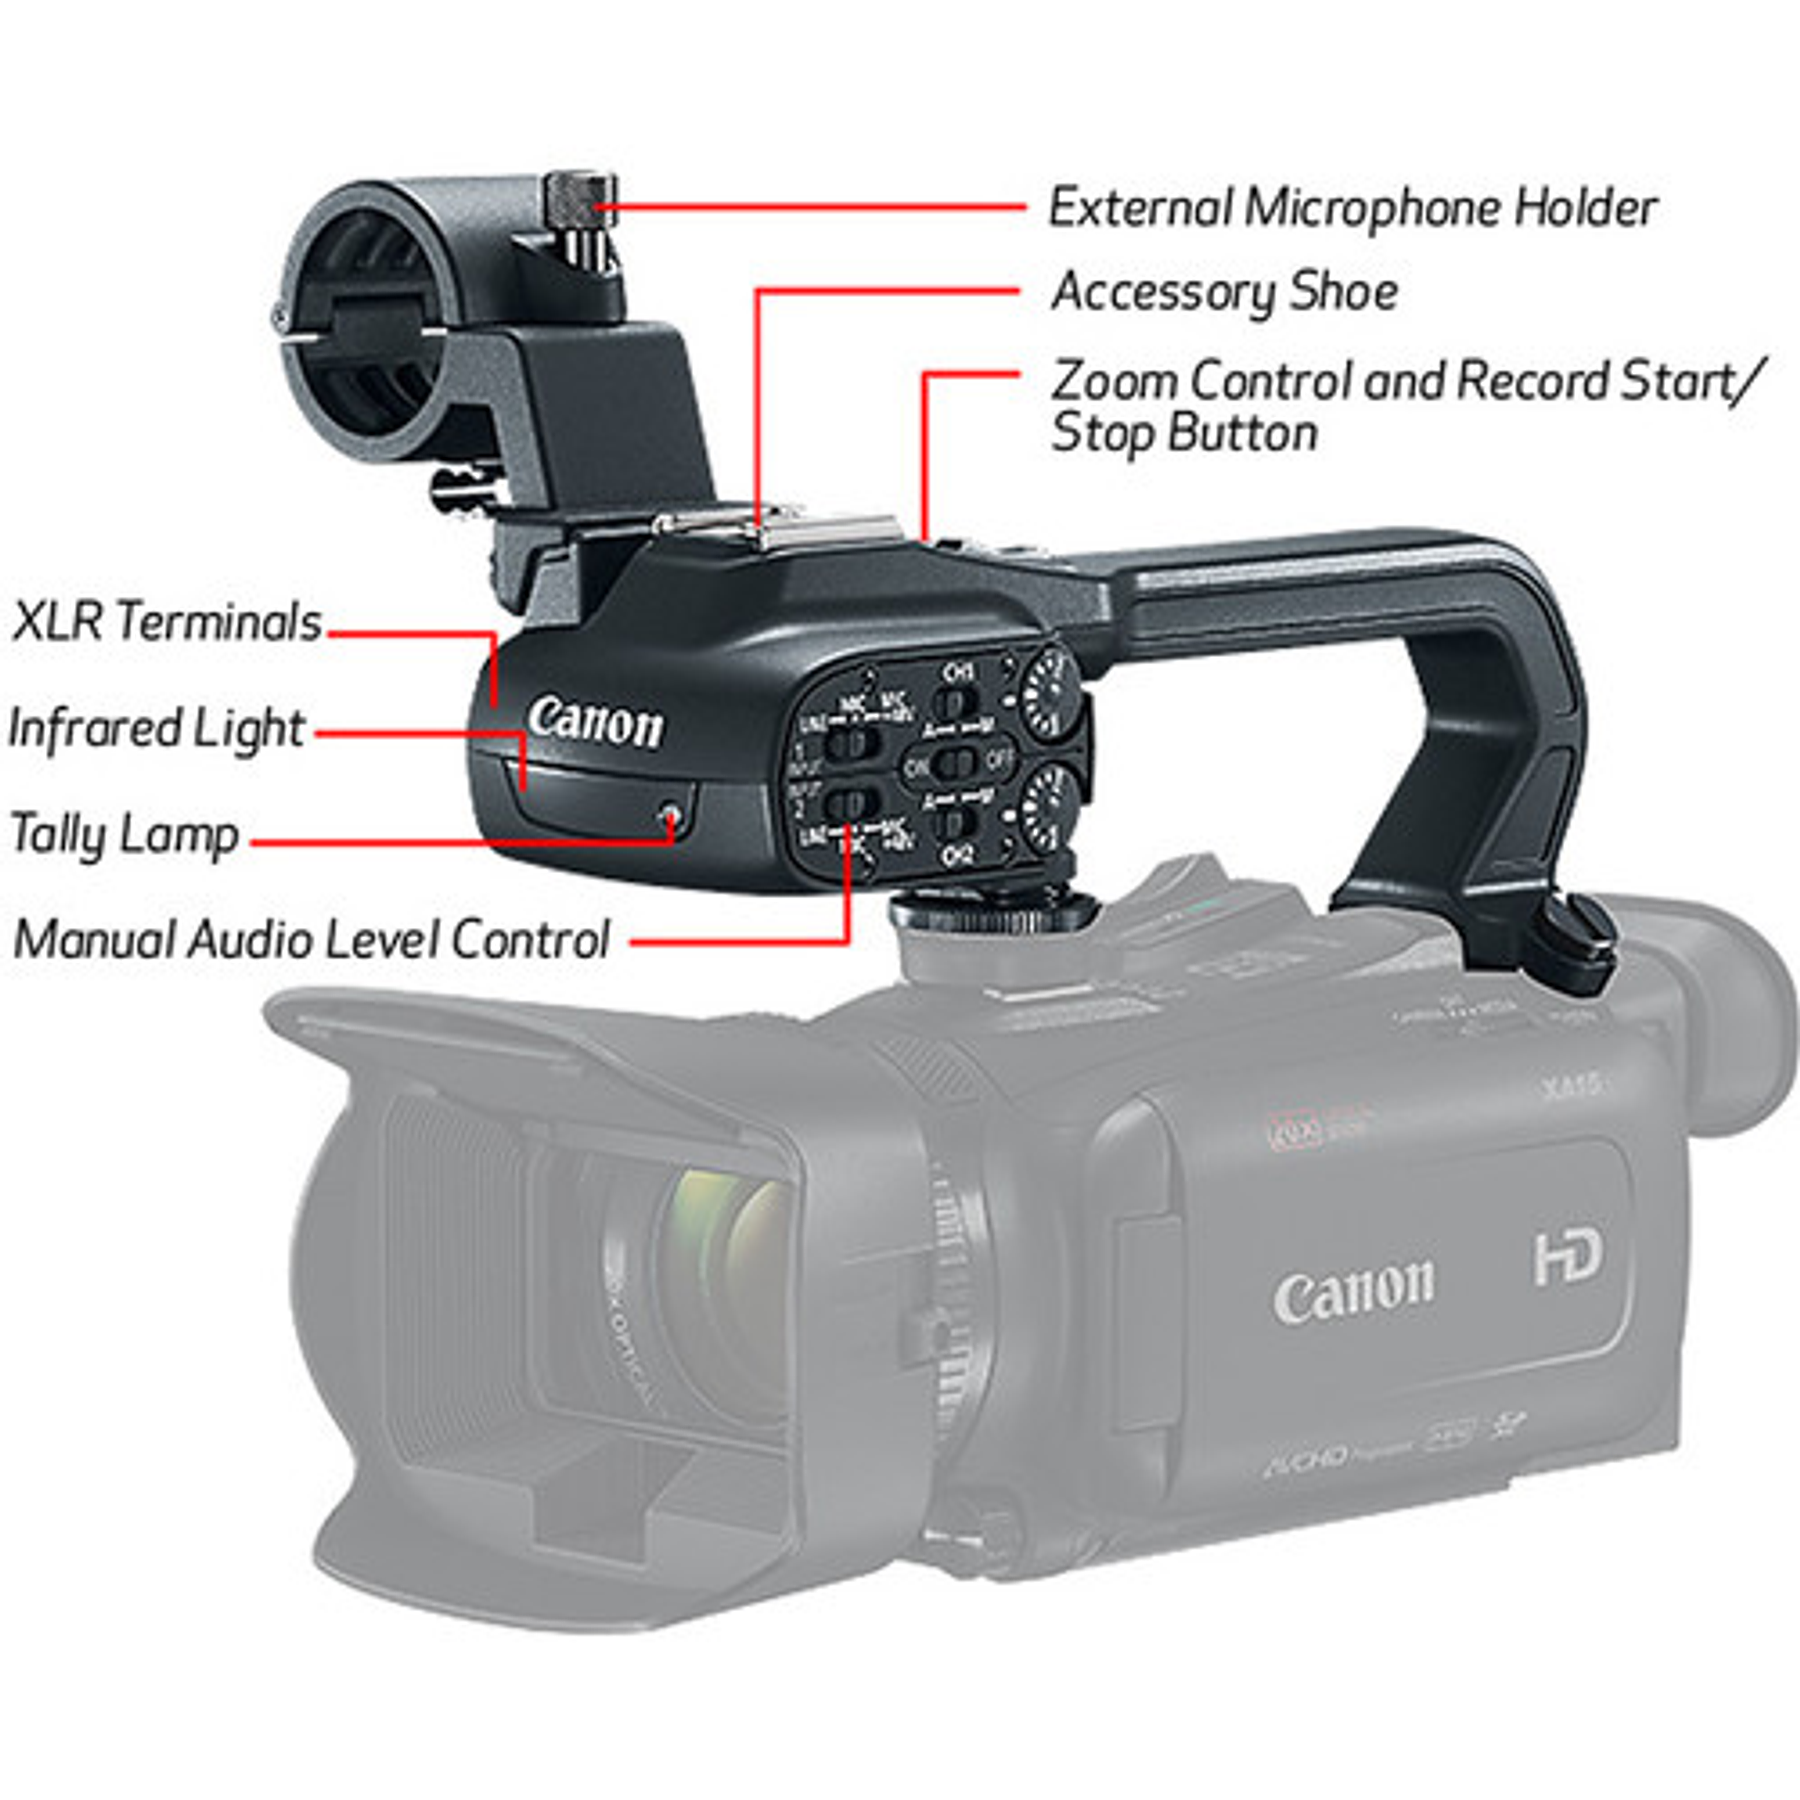 Videocámara compacta Full HD Canon XA15